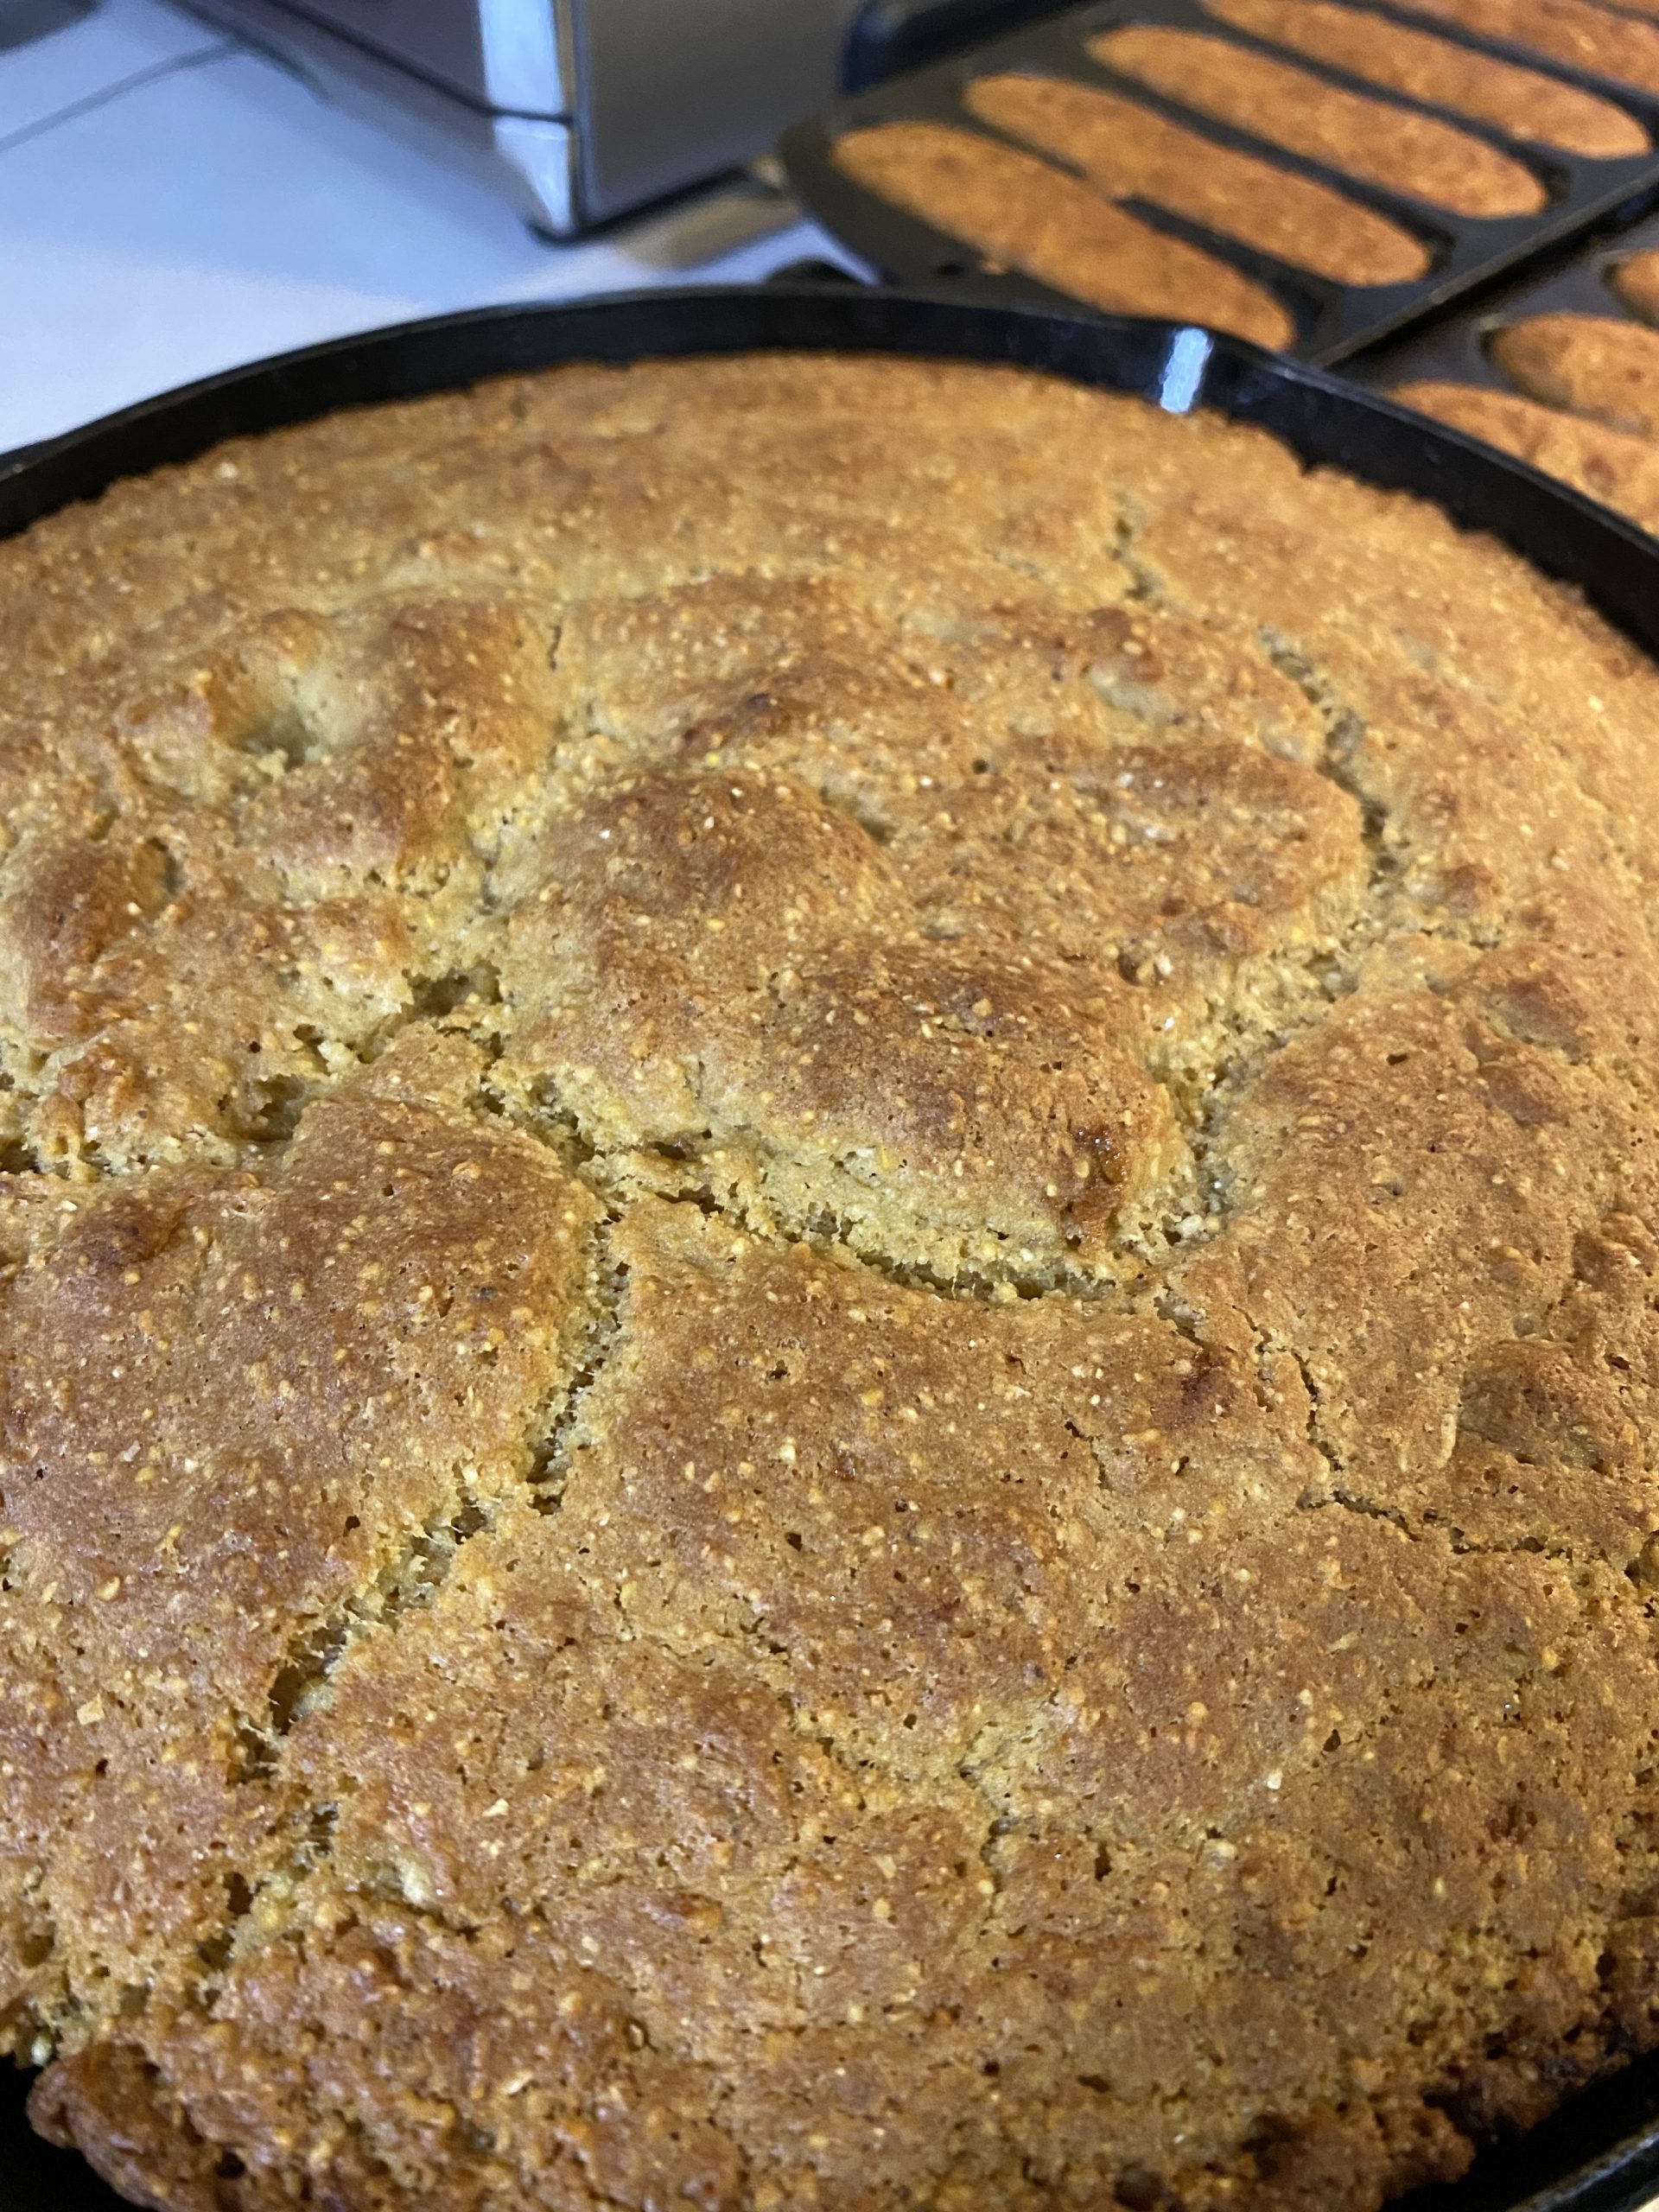 Finished pan of gluten-free cornbread